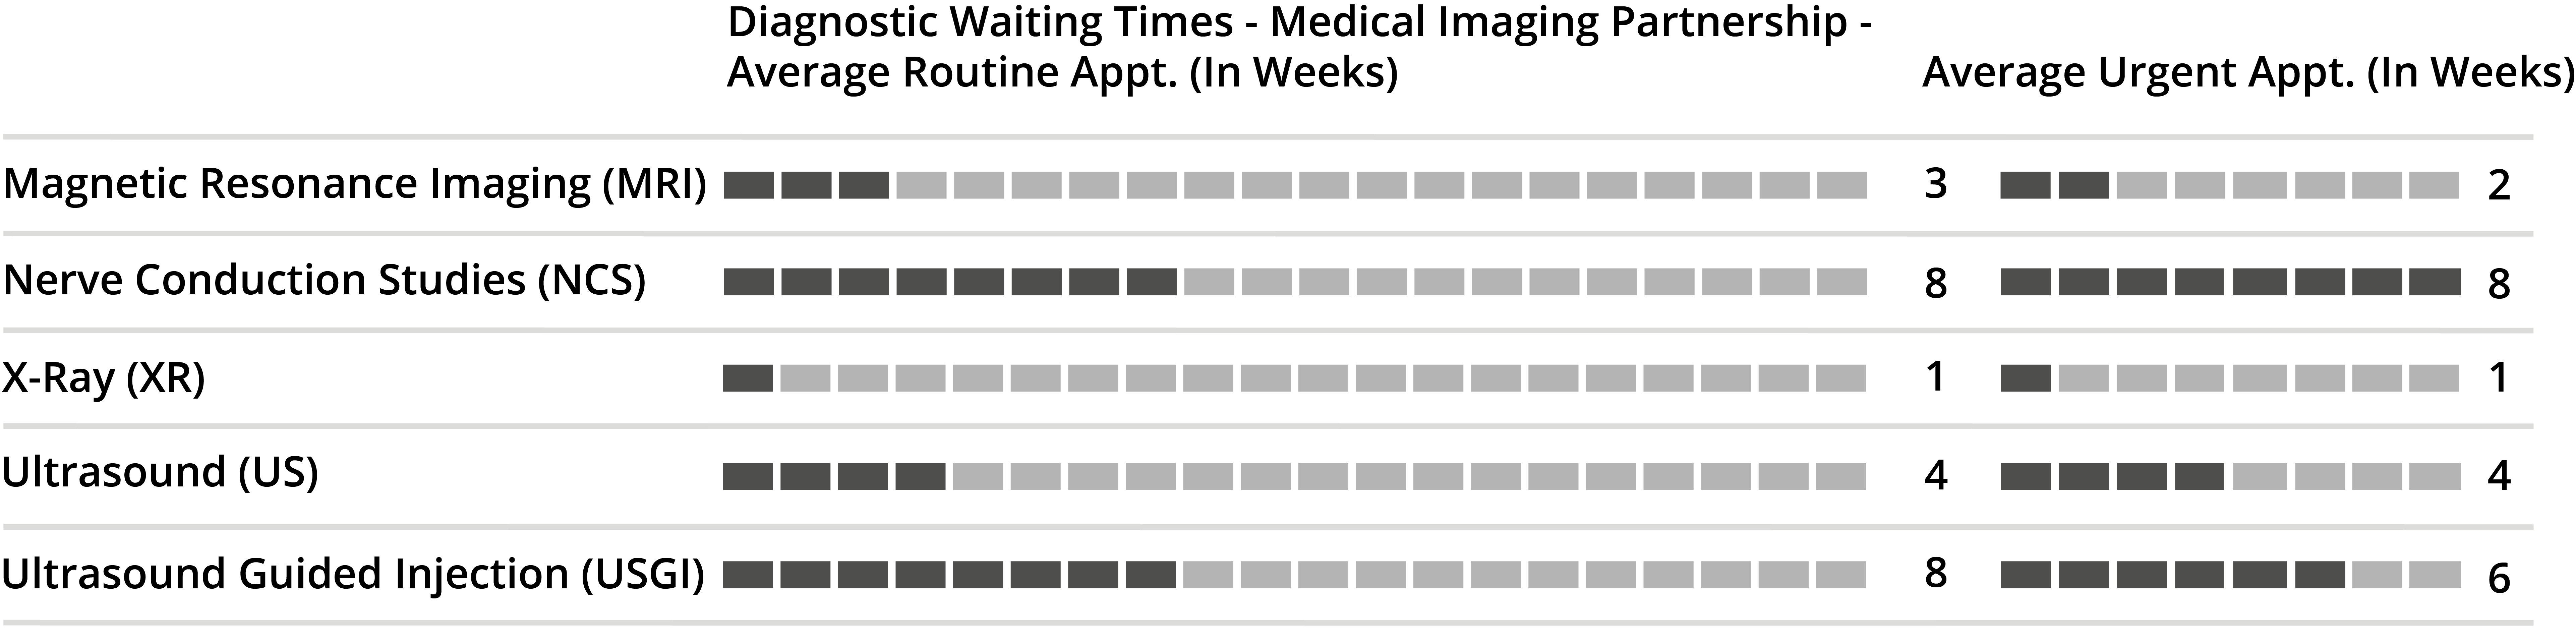 Diagnostic Waiting Times